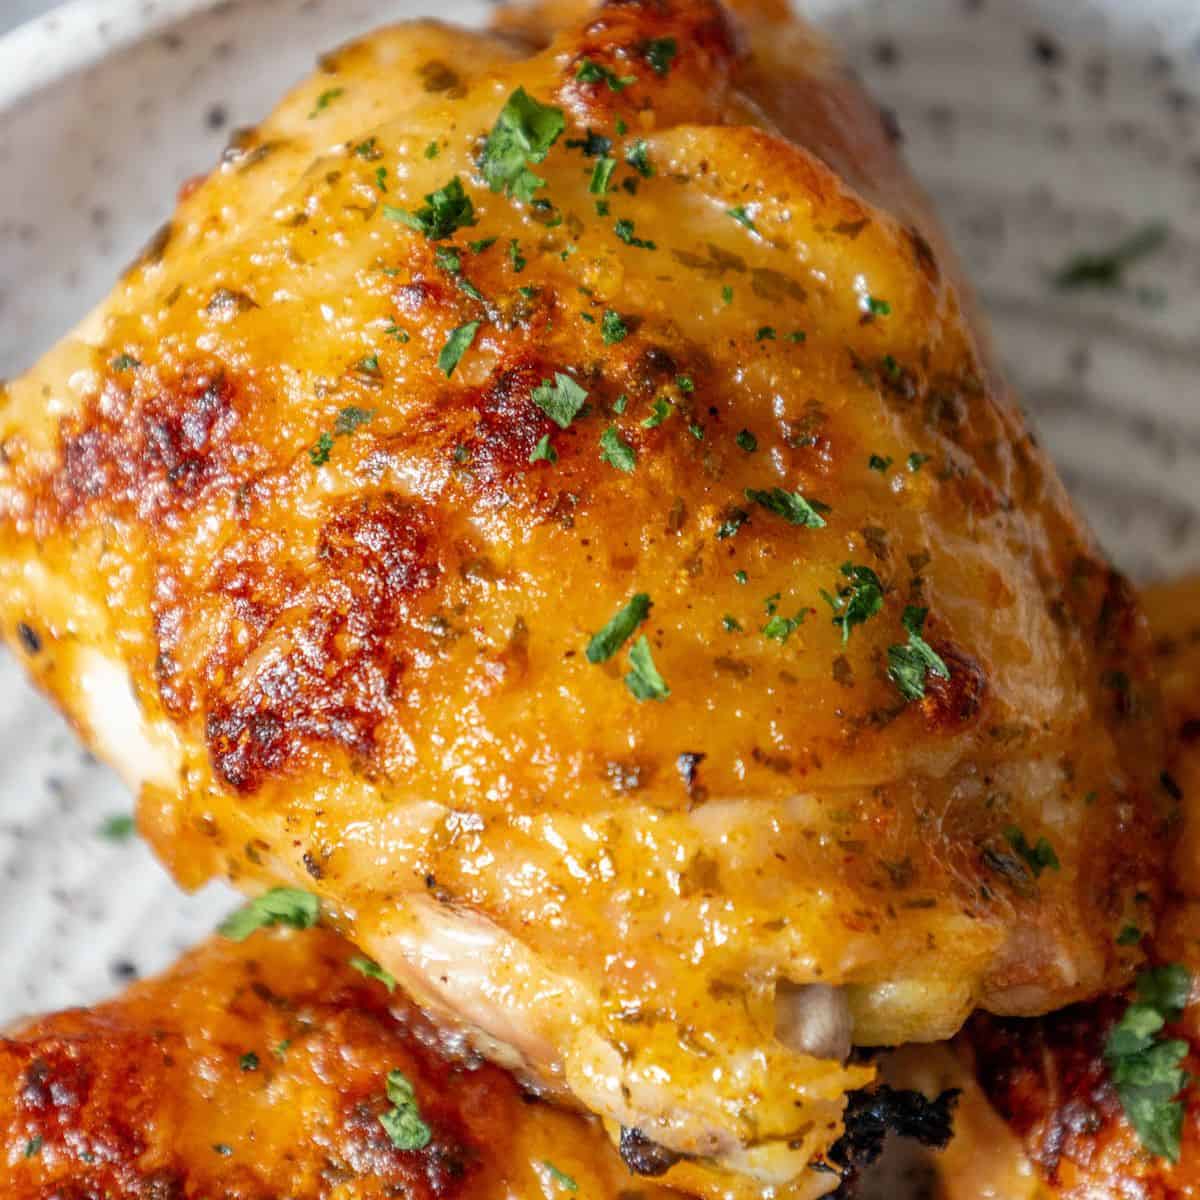 Mom's City Chicken Recipe - An easy family favorite weeknight dinner!